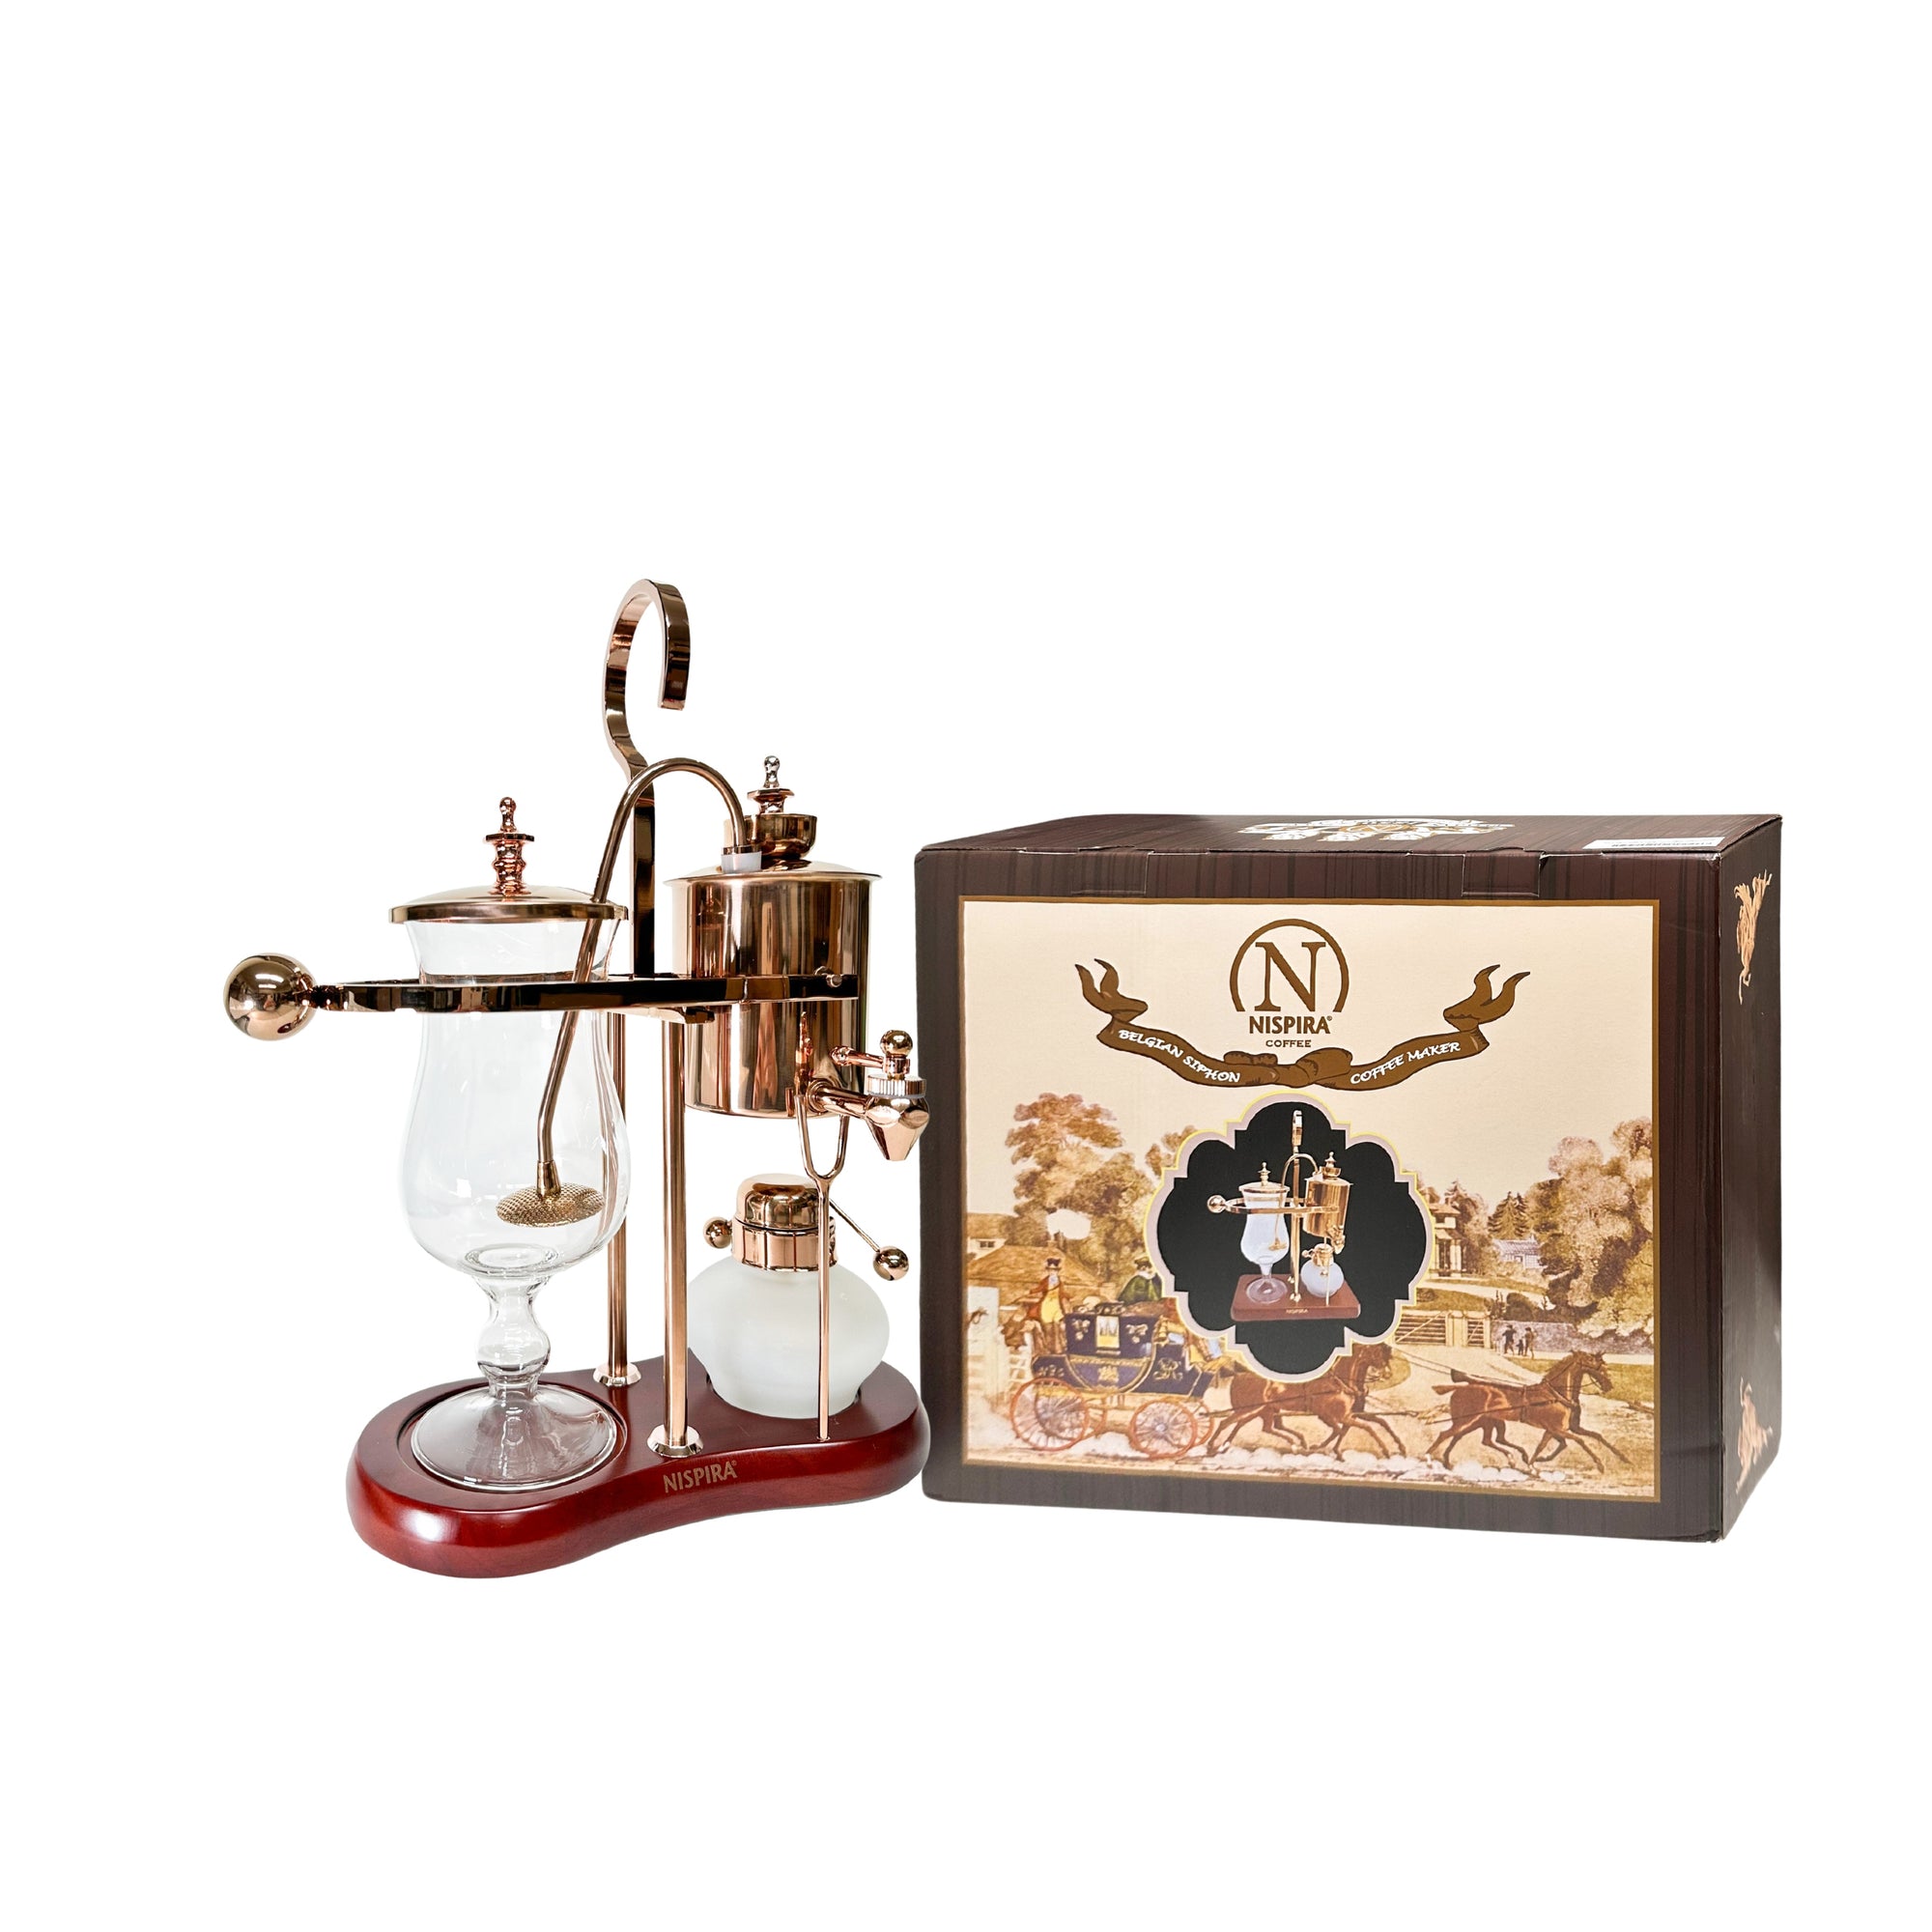 Nispira Vintage Belgium Royal Balance Syphon Siphon Coffee Maker, Copper